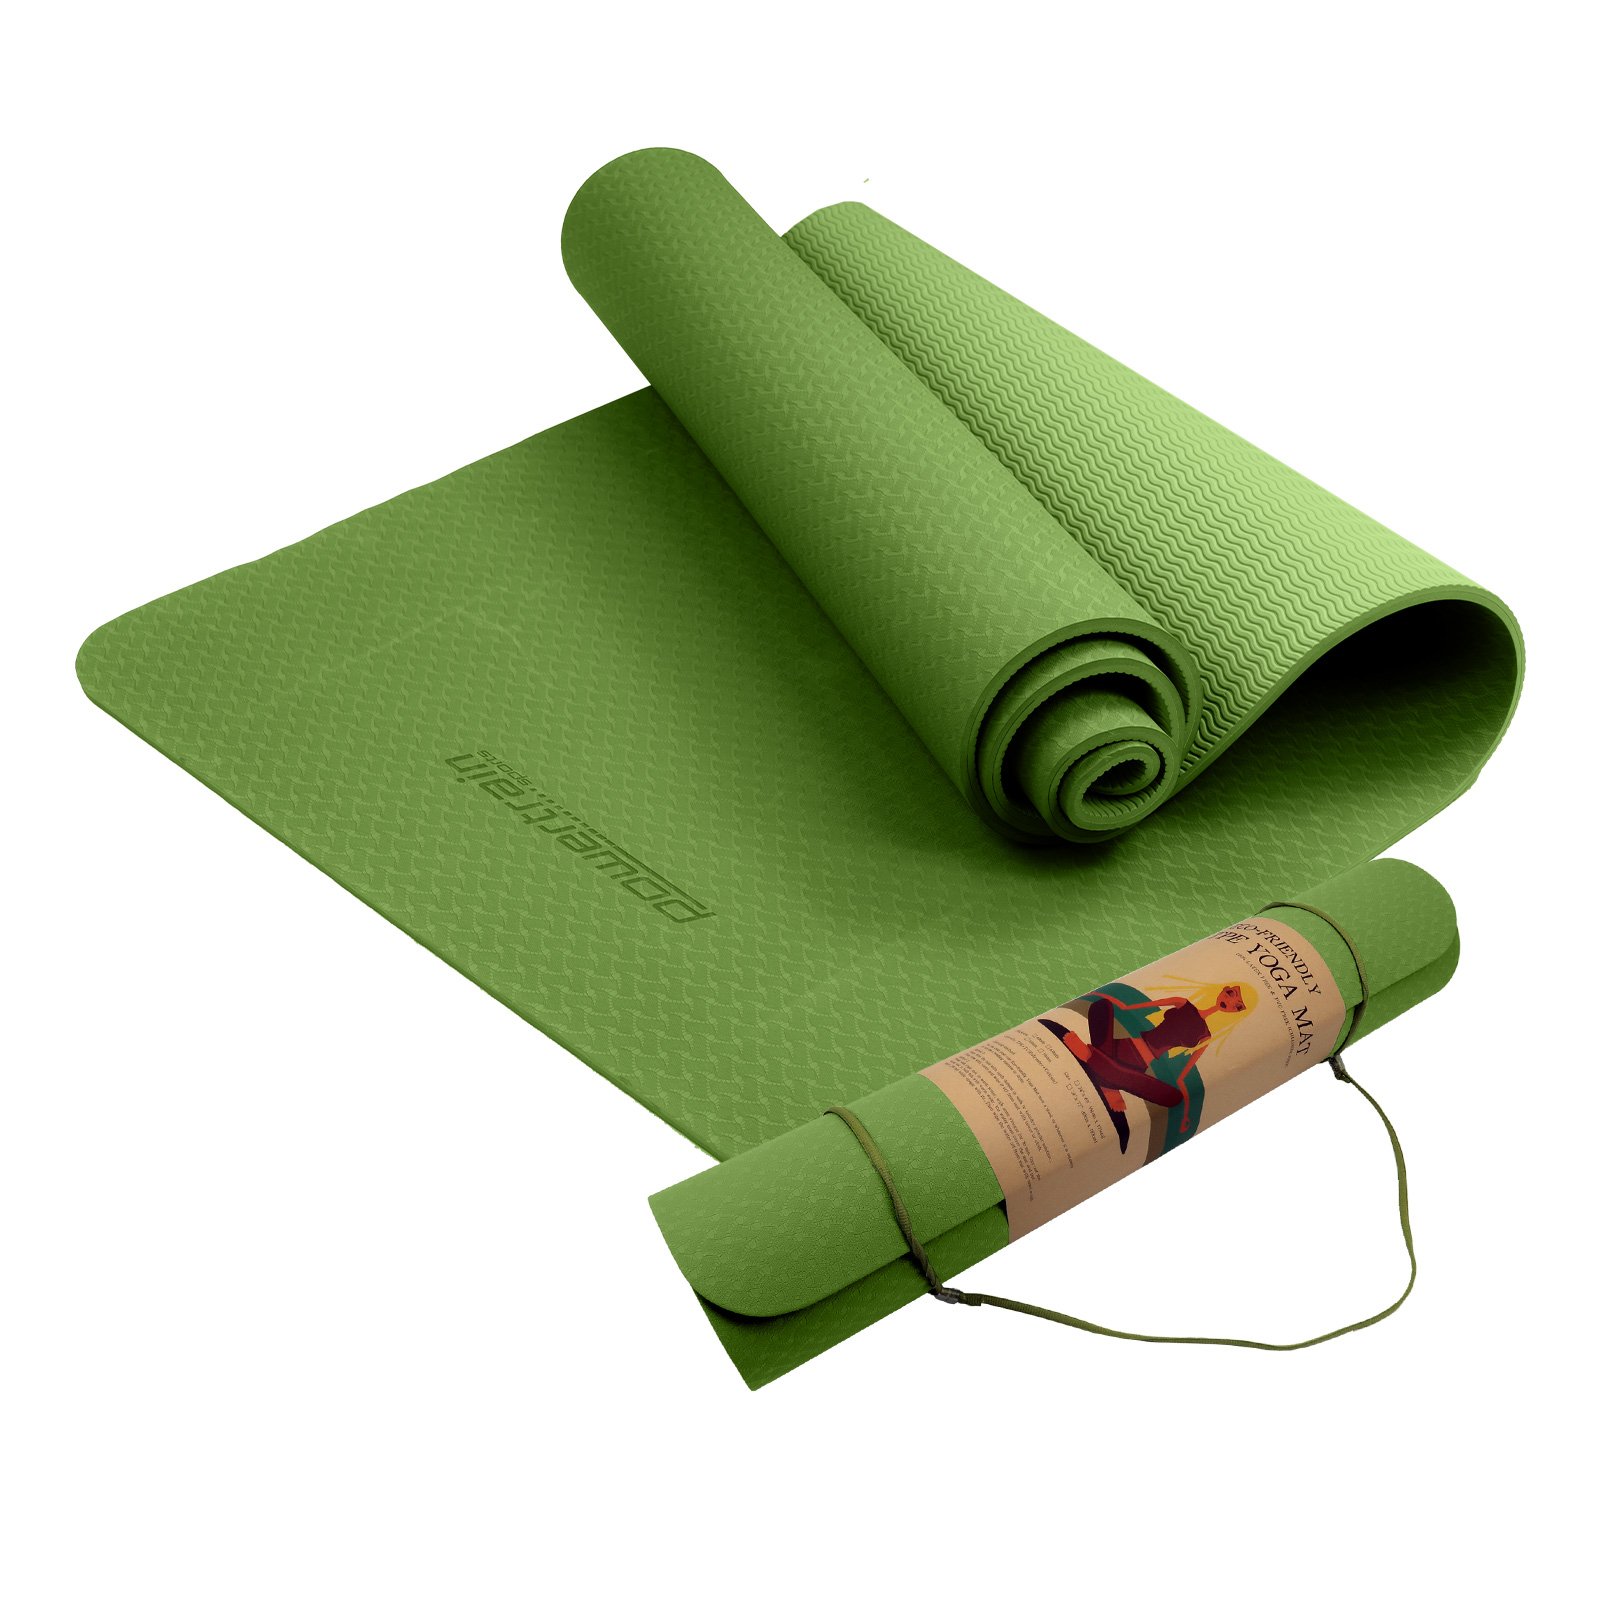 Powertrain Eco-Friendly TPE Yoga Pilates Exercise Mat 6mm - Green 1